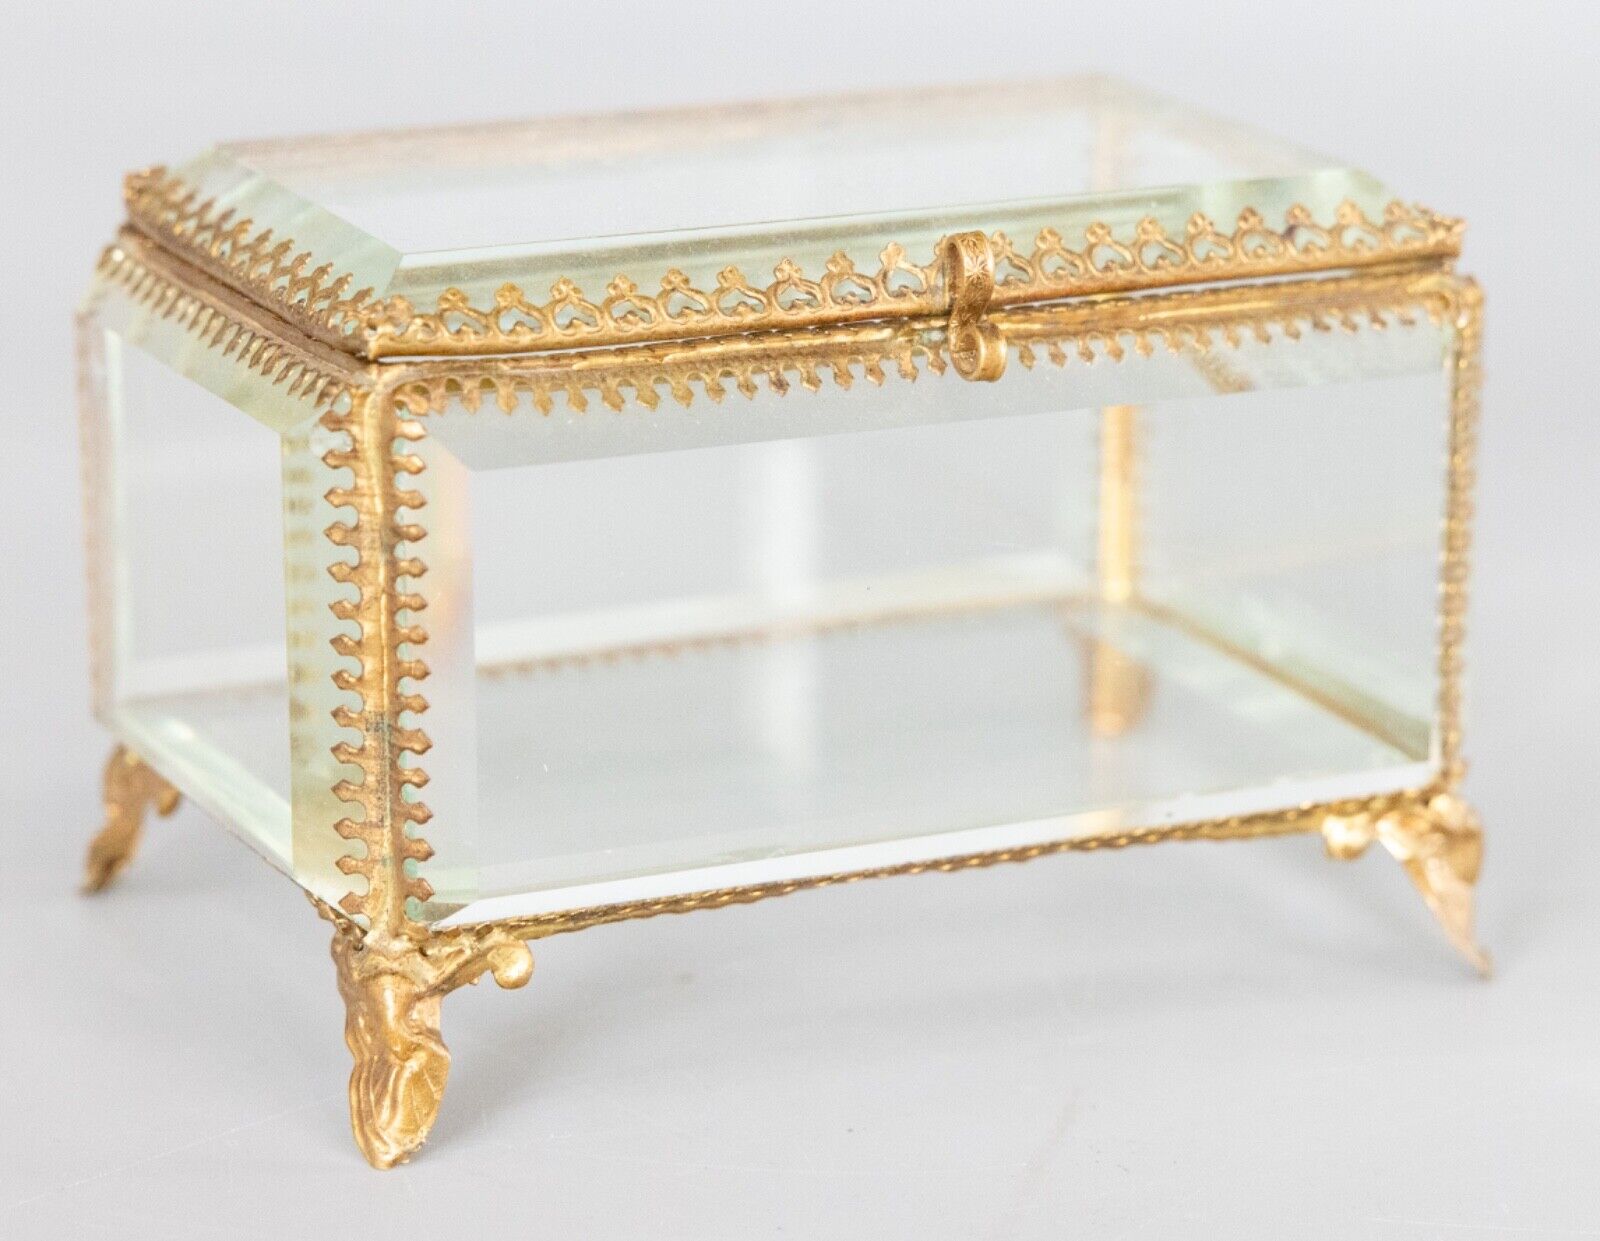 Antique French Beveled Glass and Ormolu Jewelry Dresser Box